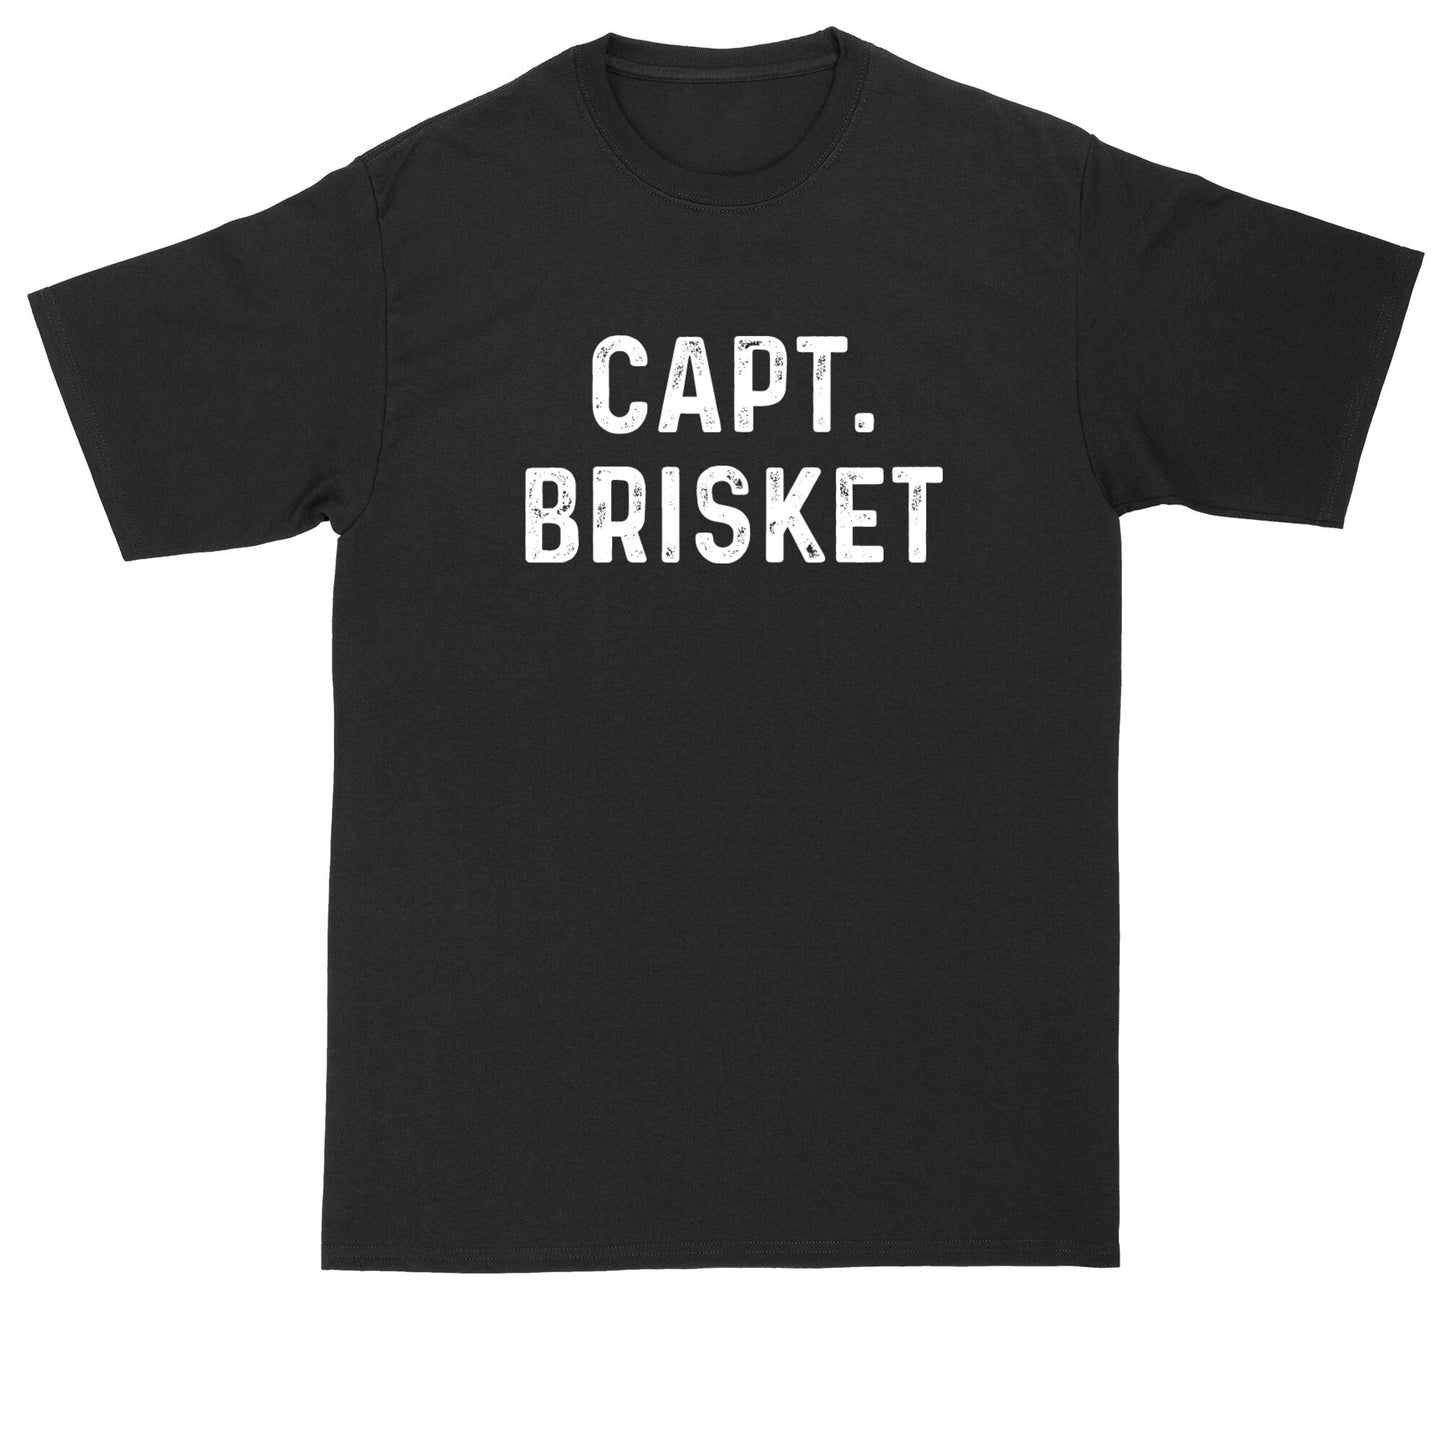 Capt Brisket | Big and Tall Mens T-Shirt | Funny T-Shirt | Graphic T-Shirt